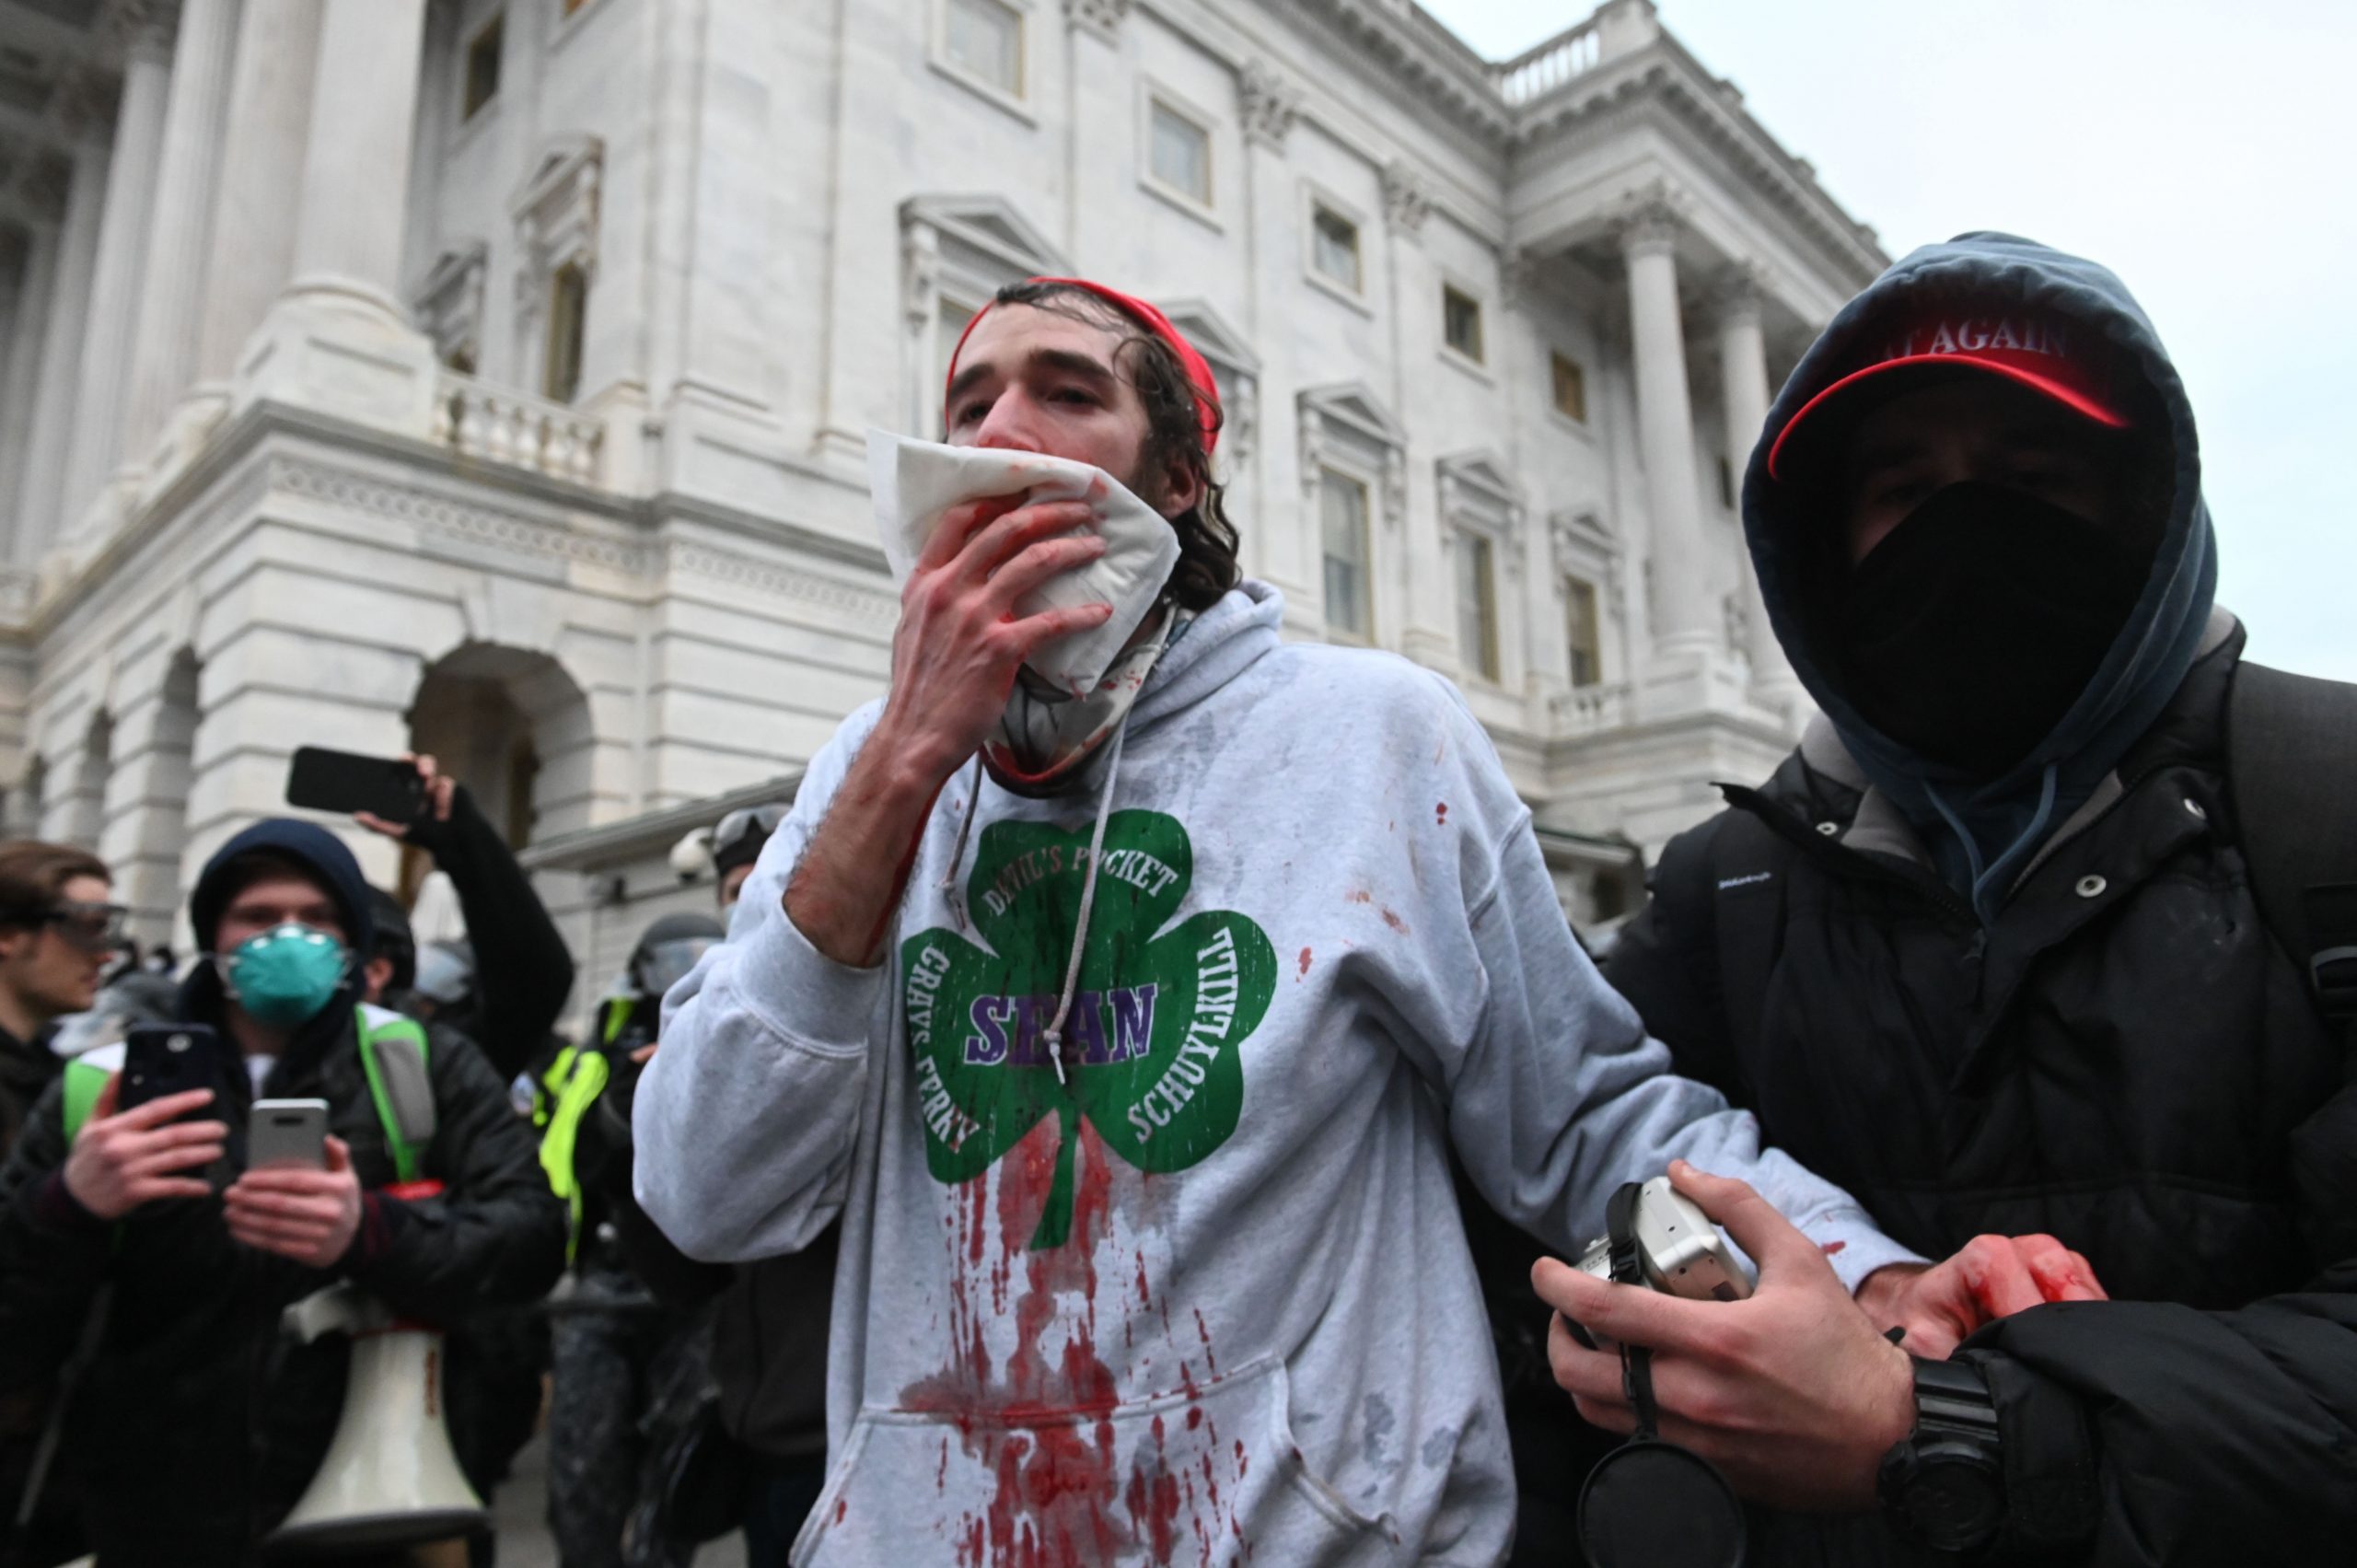 Capitol riots like violence concerns the US ahead of Joe Bidens inauguration